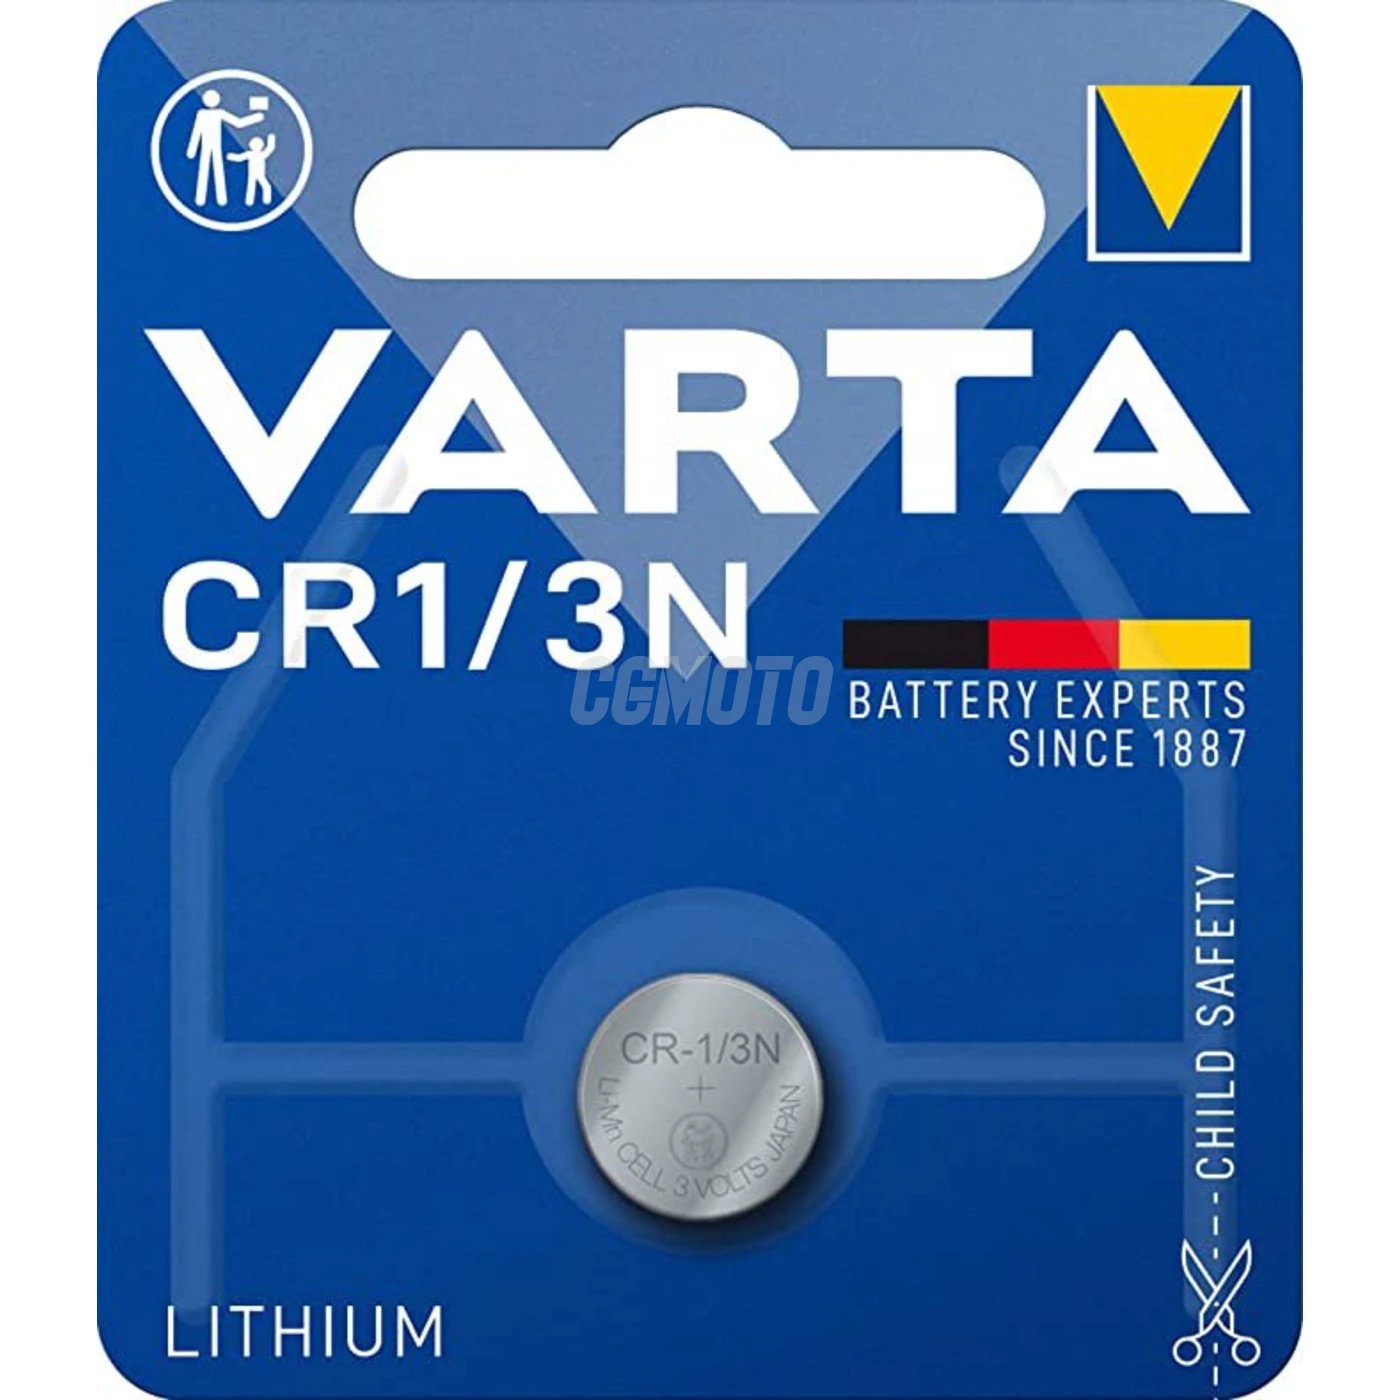 Varta CR1/3N lithium x 1 pila (blister)